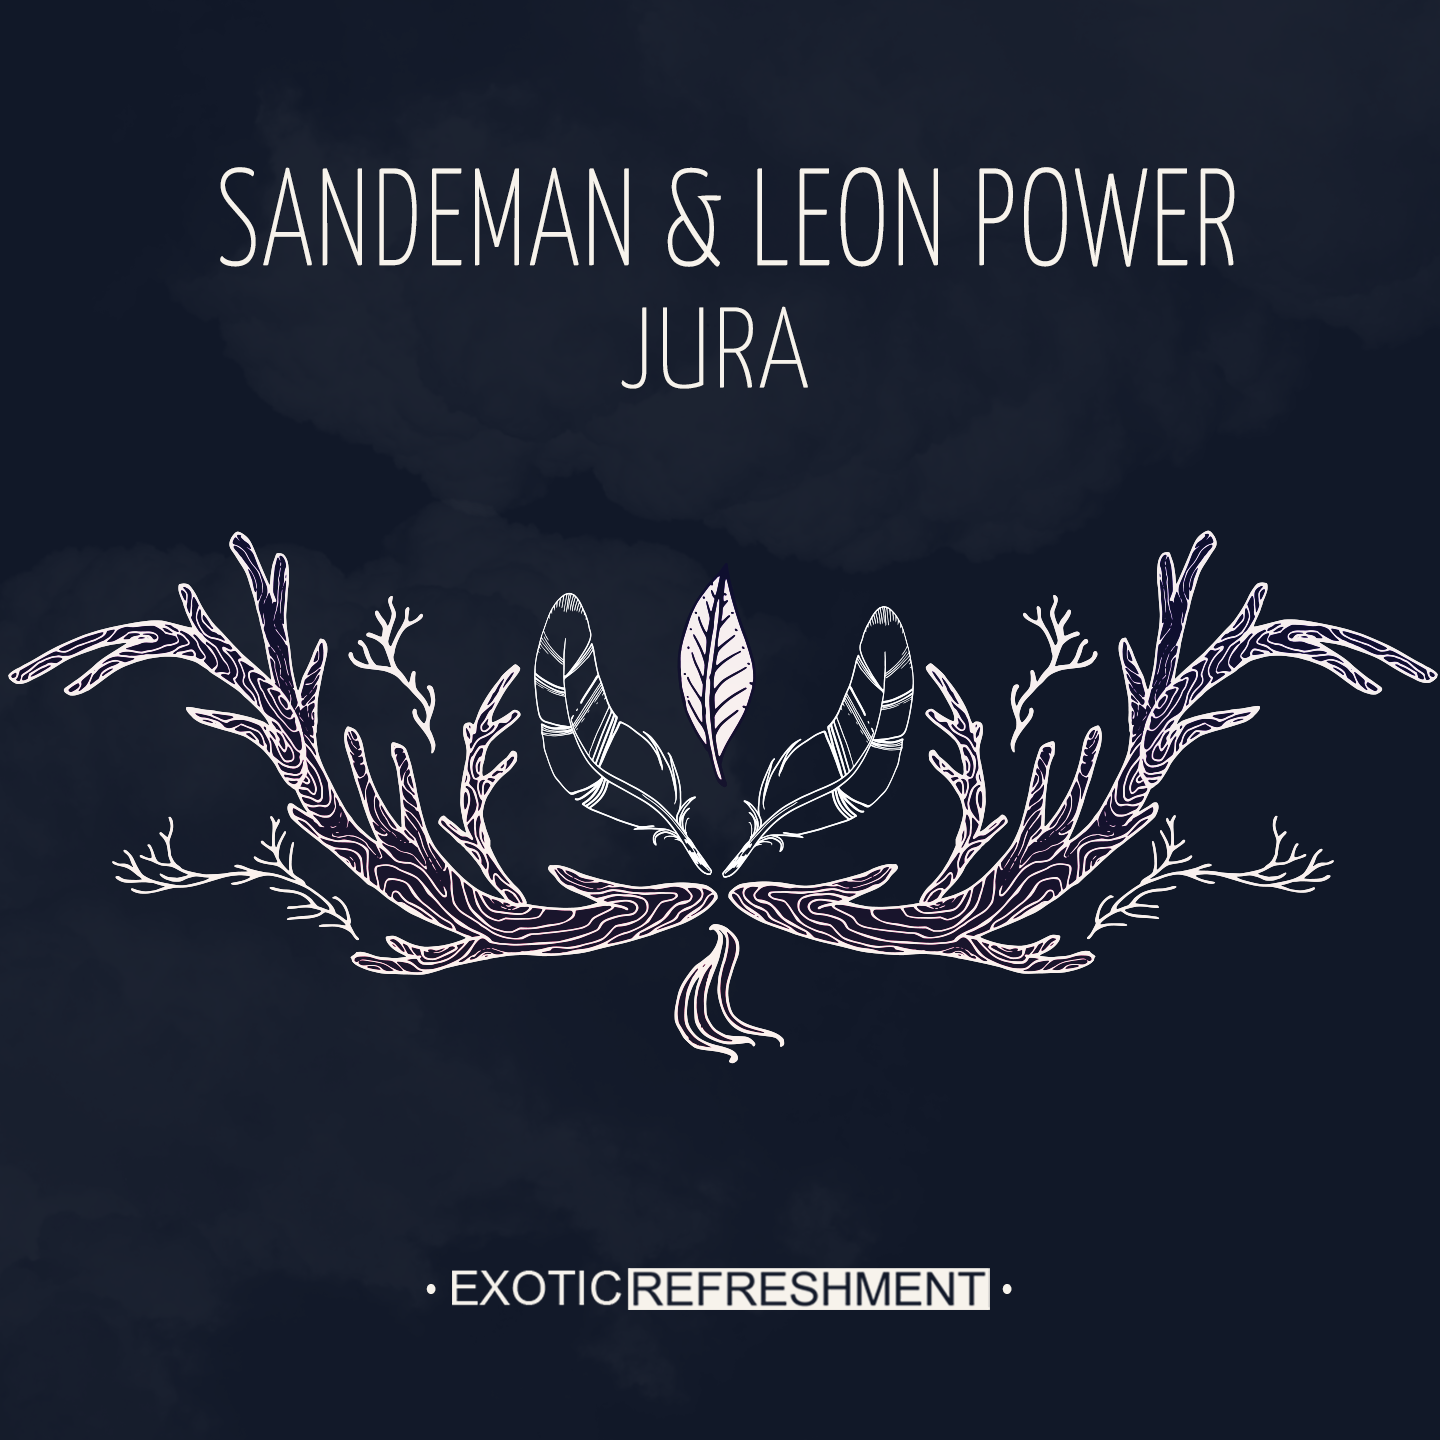 Sandeman & Leon Power - Jura